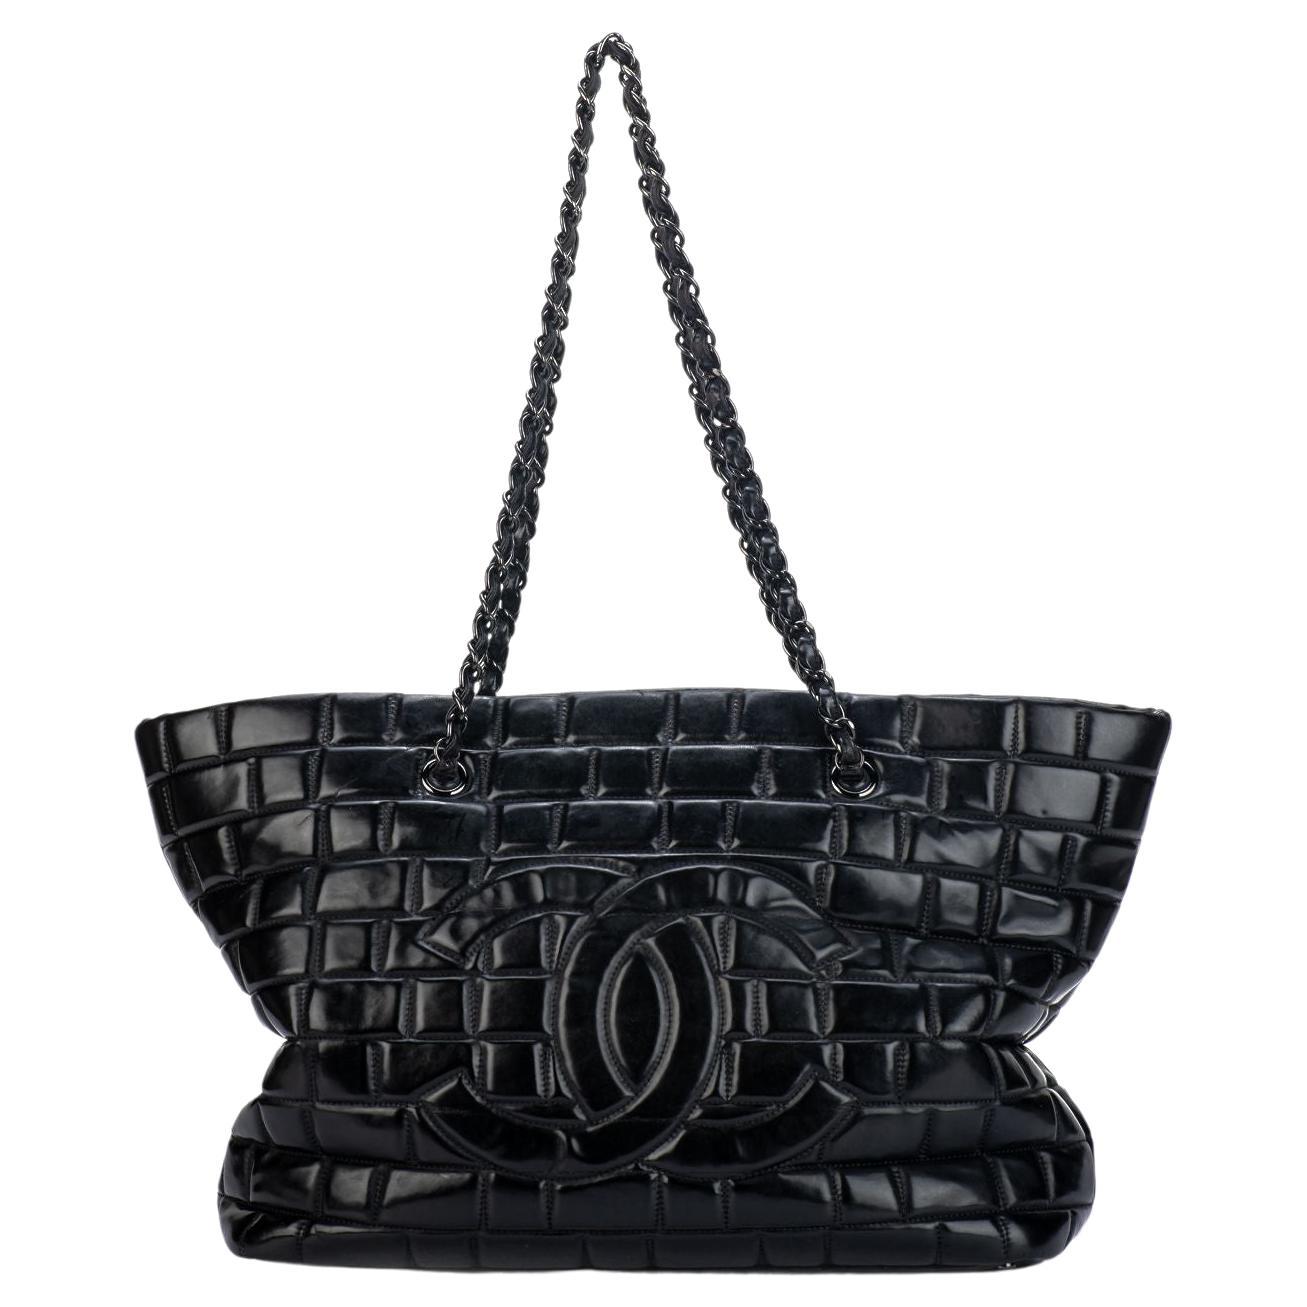 Chanel Große Tragetasche aus schwarzem gebürstetem Leder im Angebot